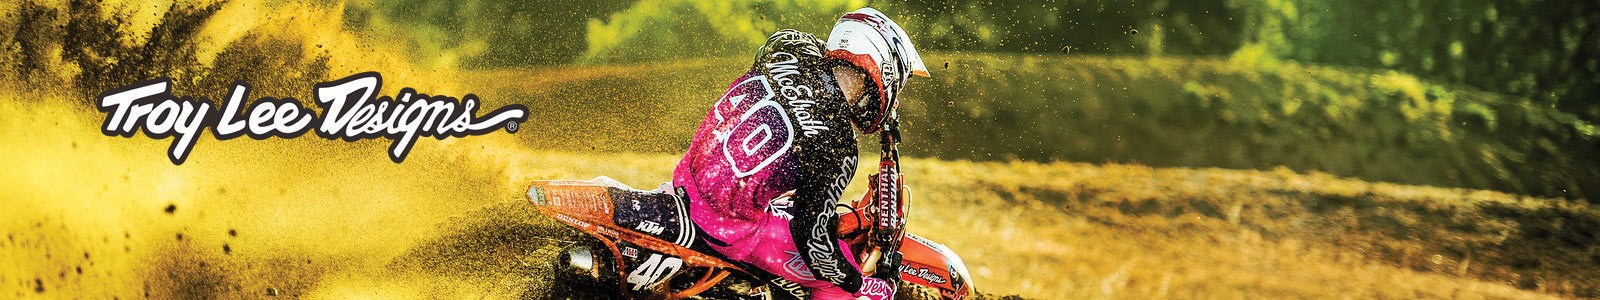 Troy-Lee-Designs-Motocross-Helme